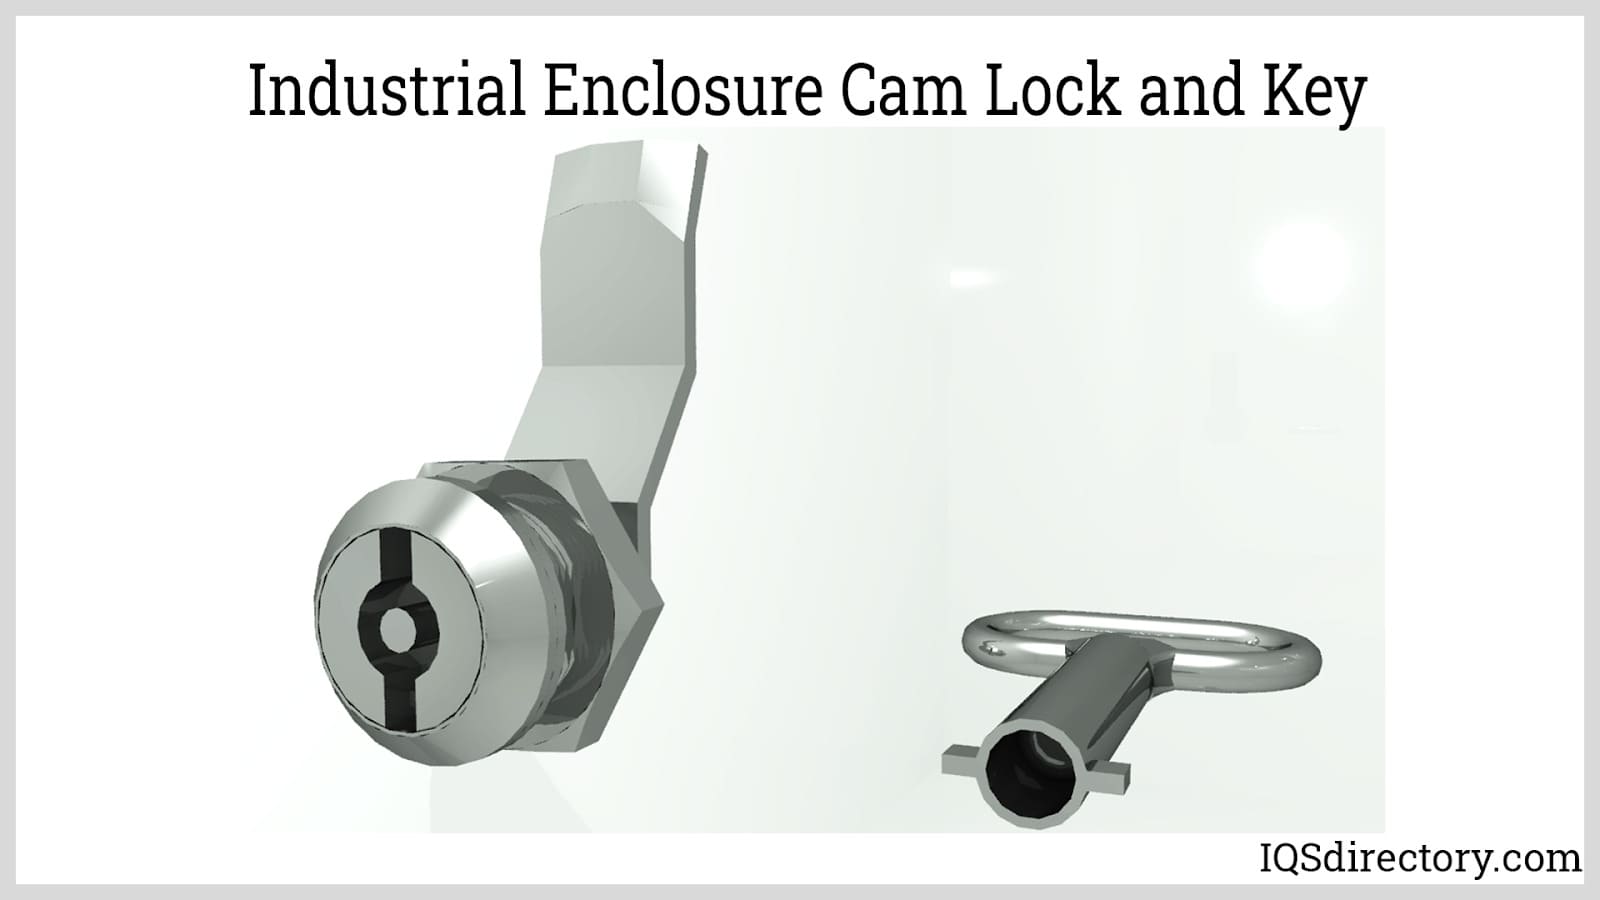 Industrial Enclosure Cam Lock and Key